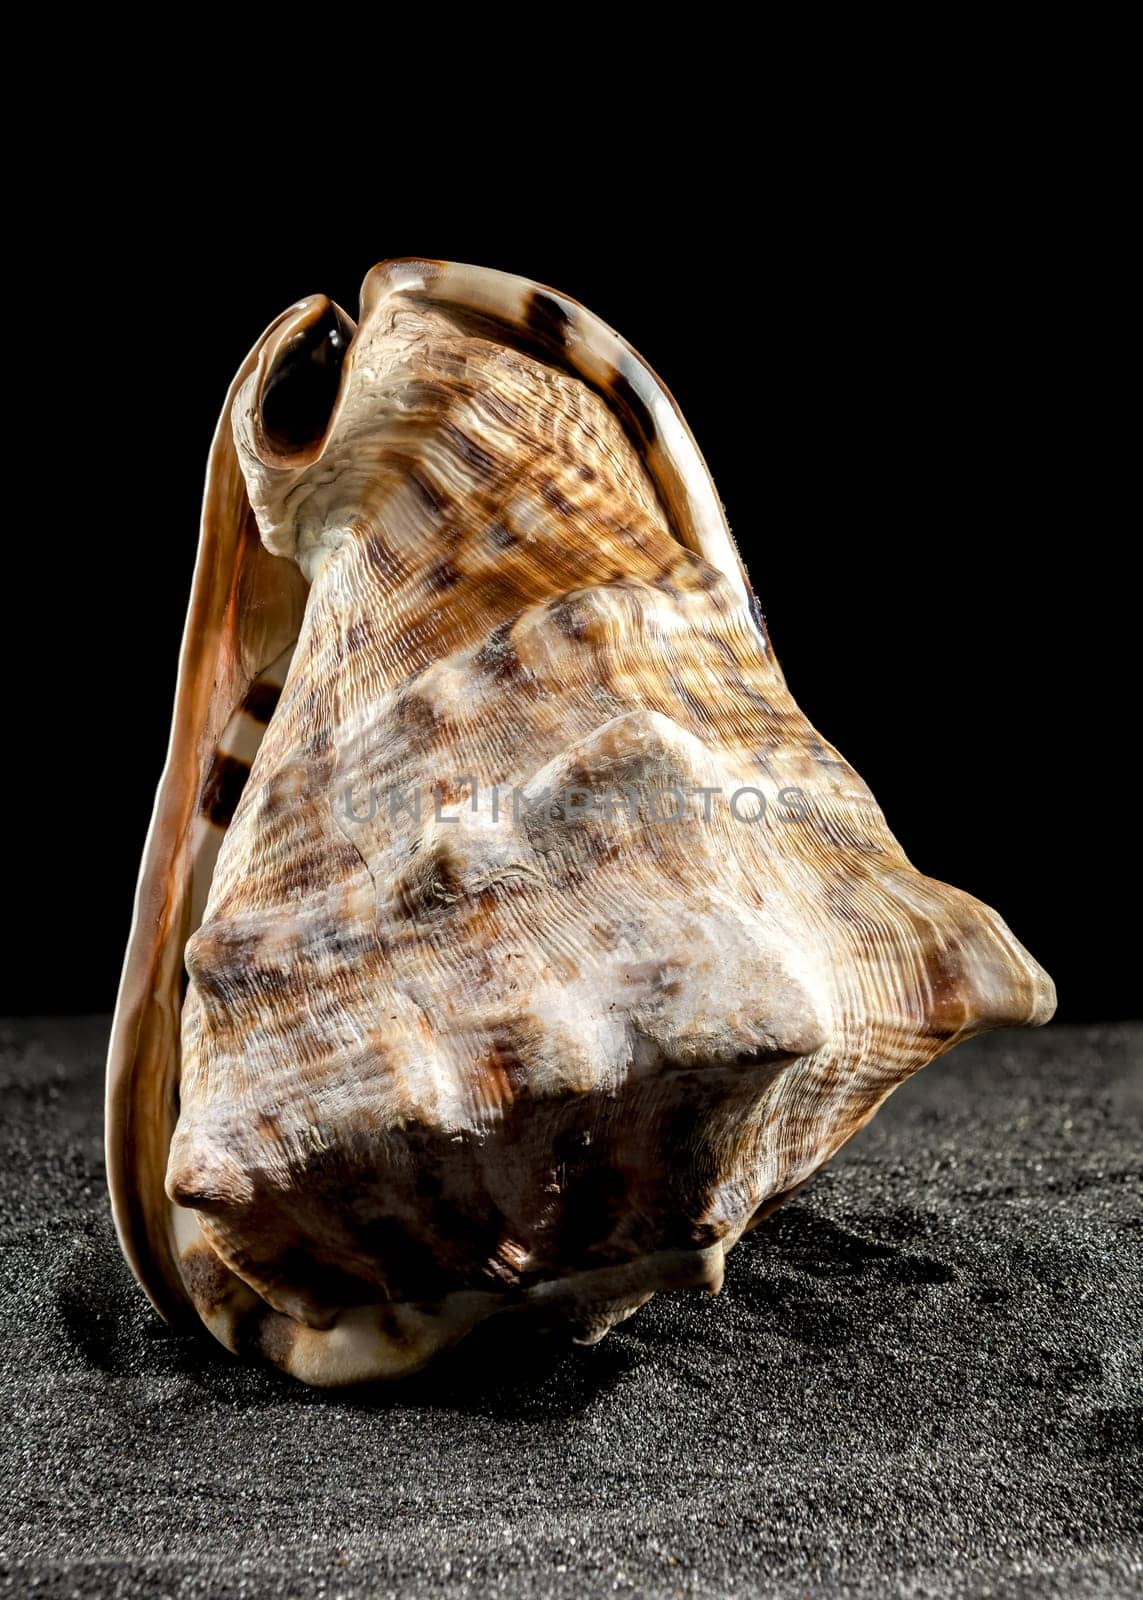 King Helmet seashell on a dark background by Multipedia